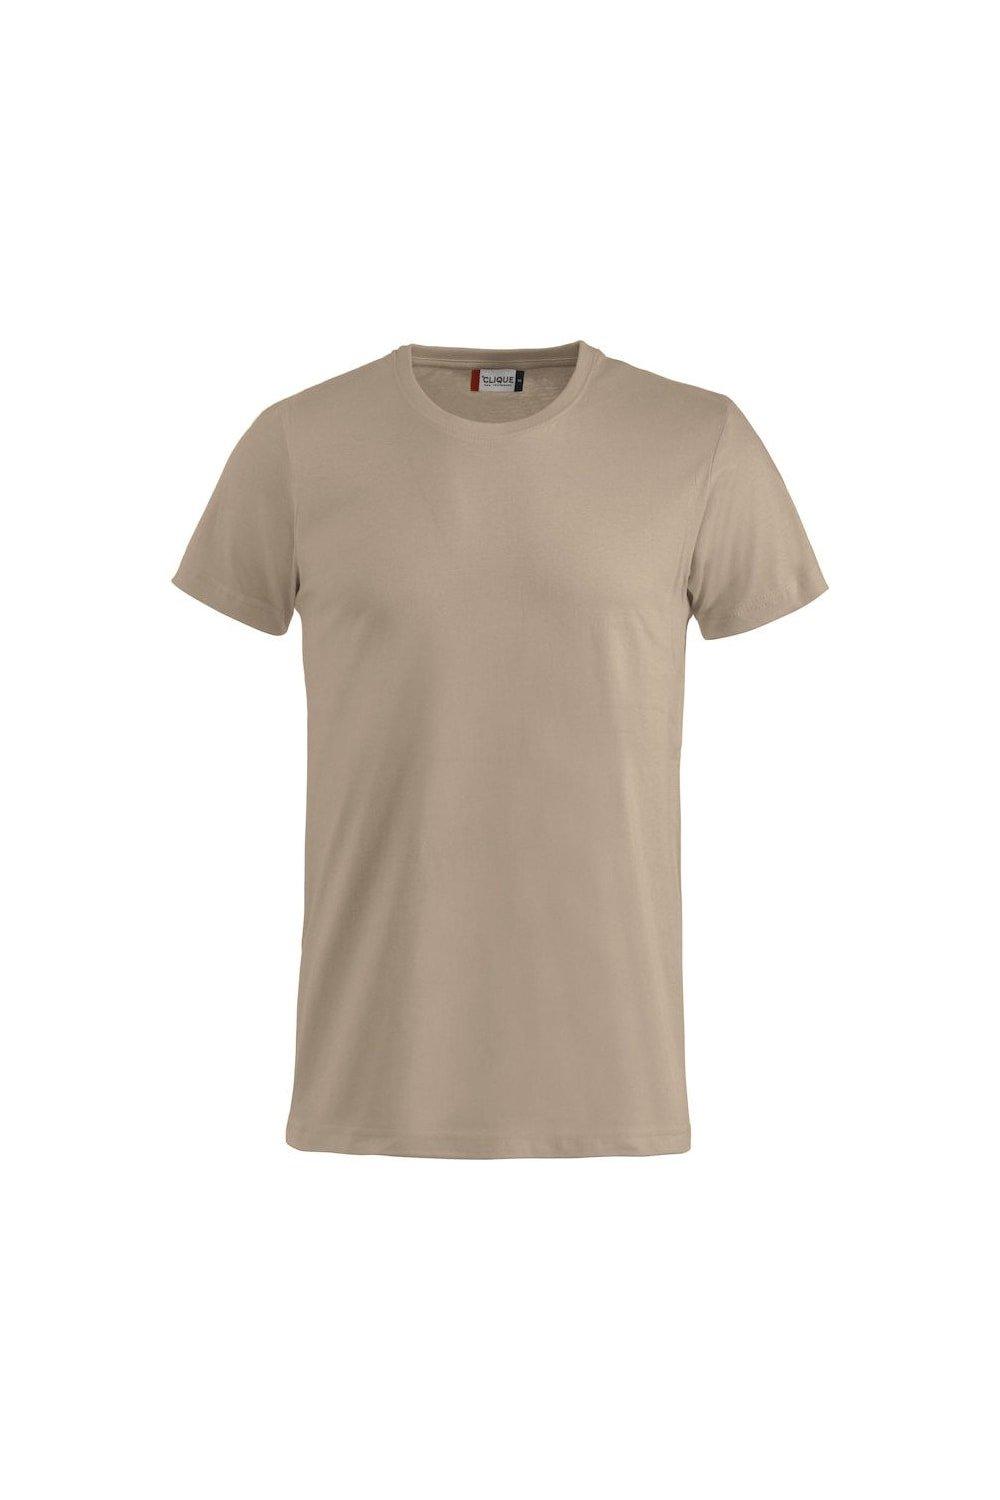 Базовая футболка Clique, коричневый футболка clique с надписью 42 размер